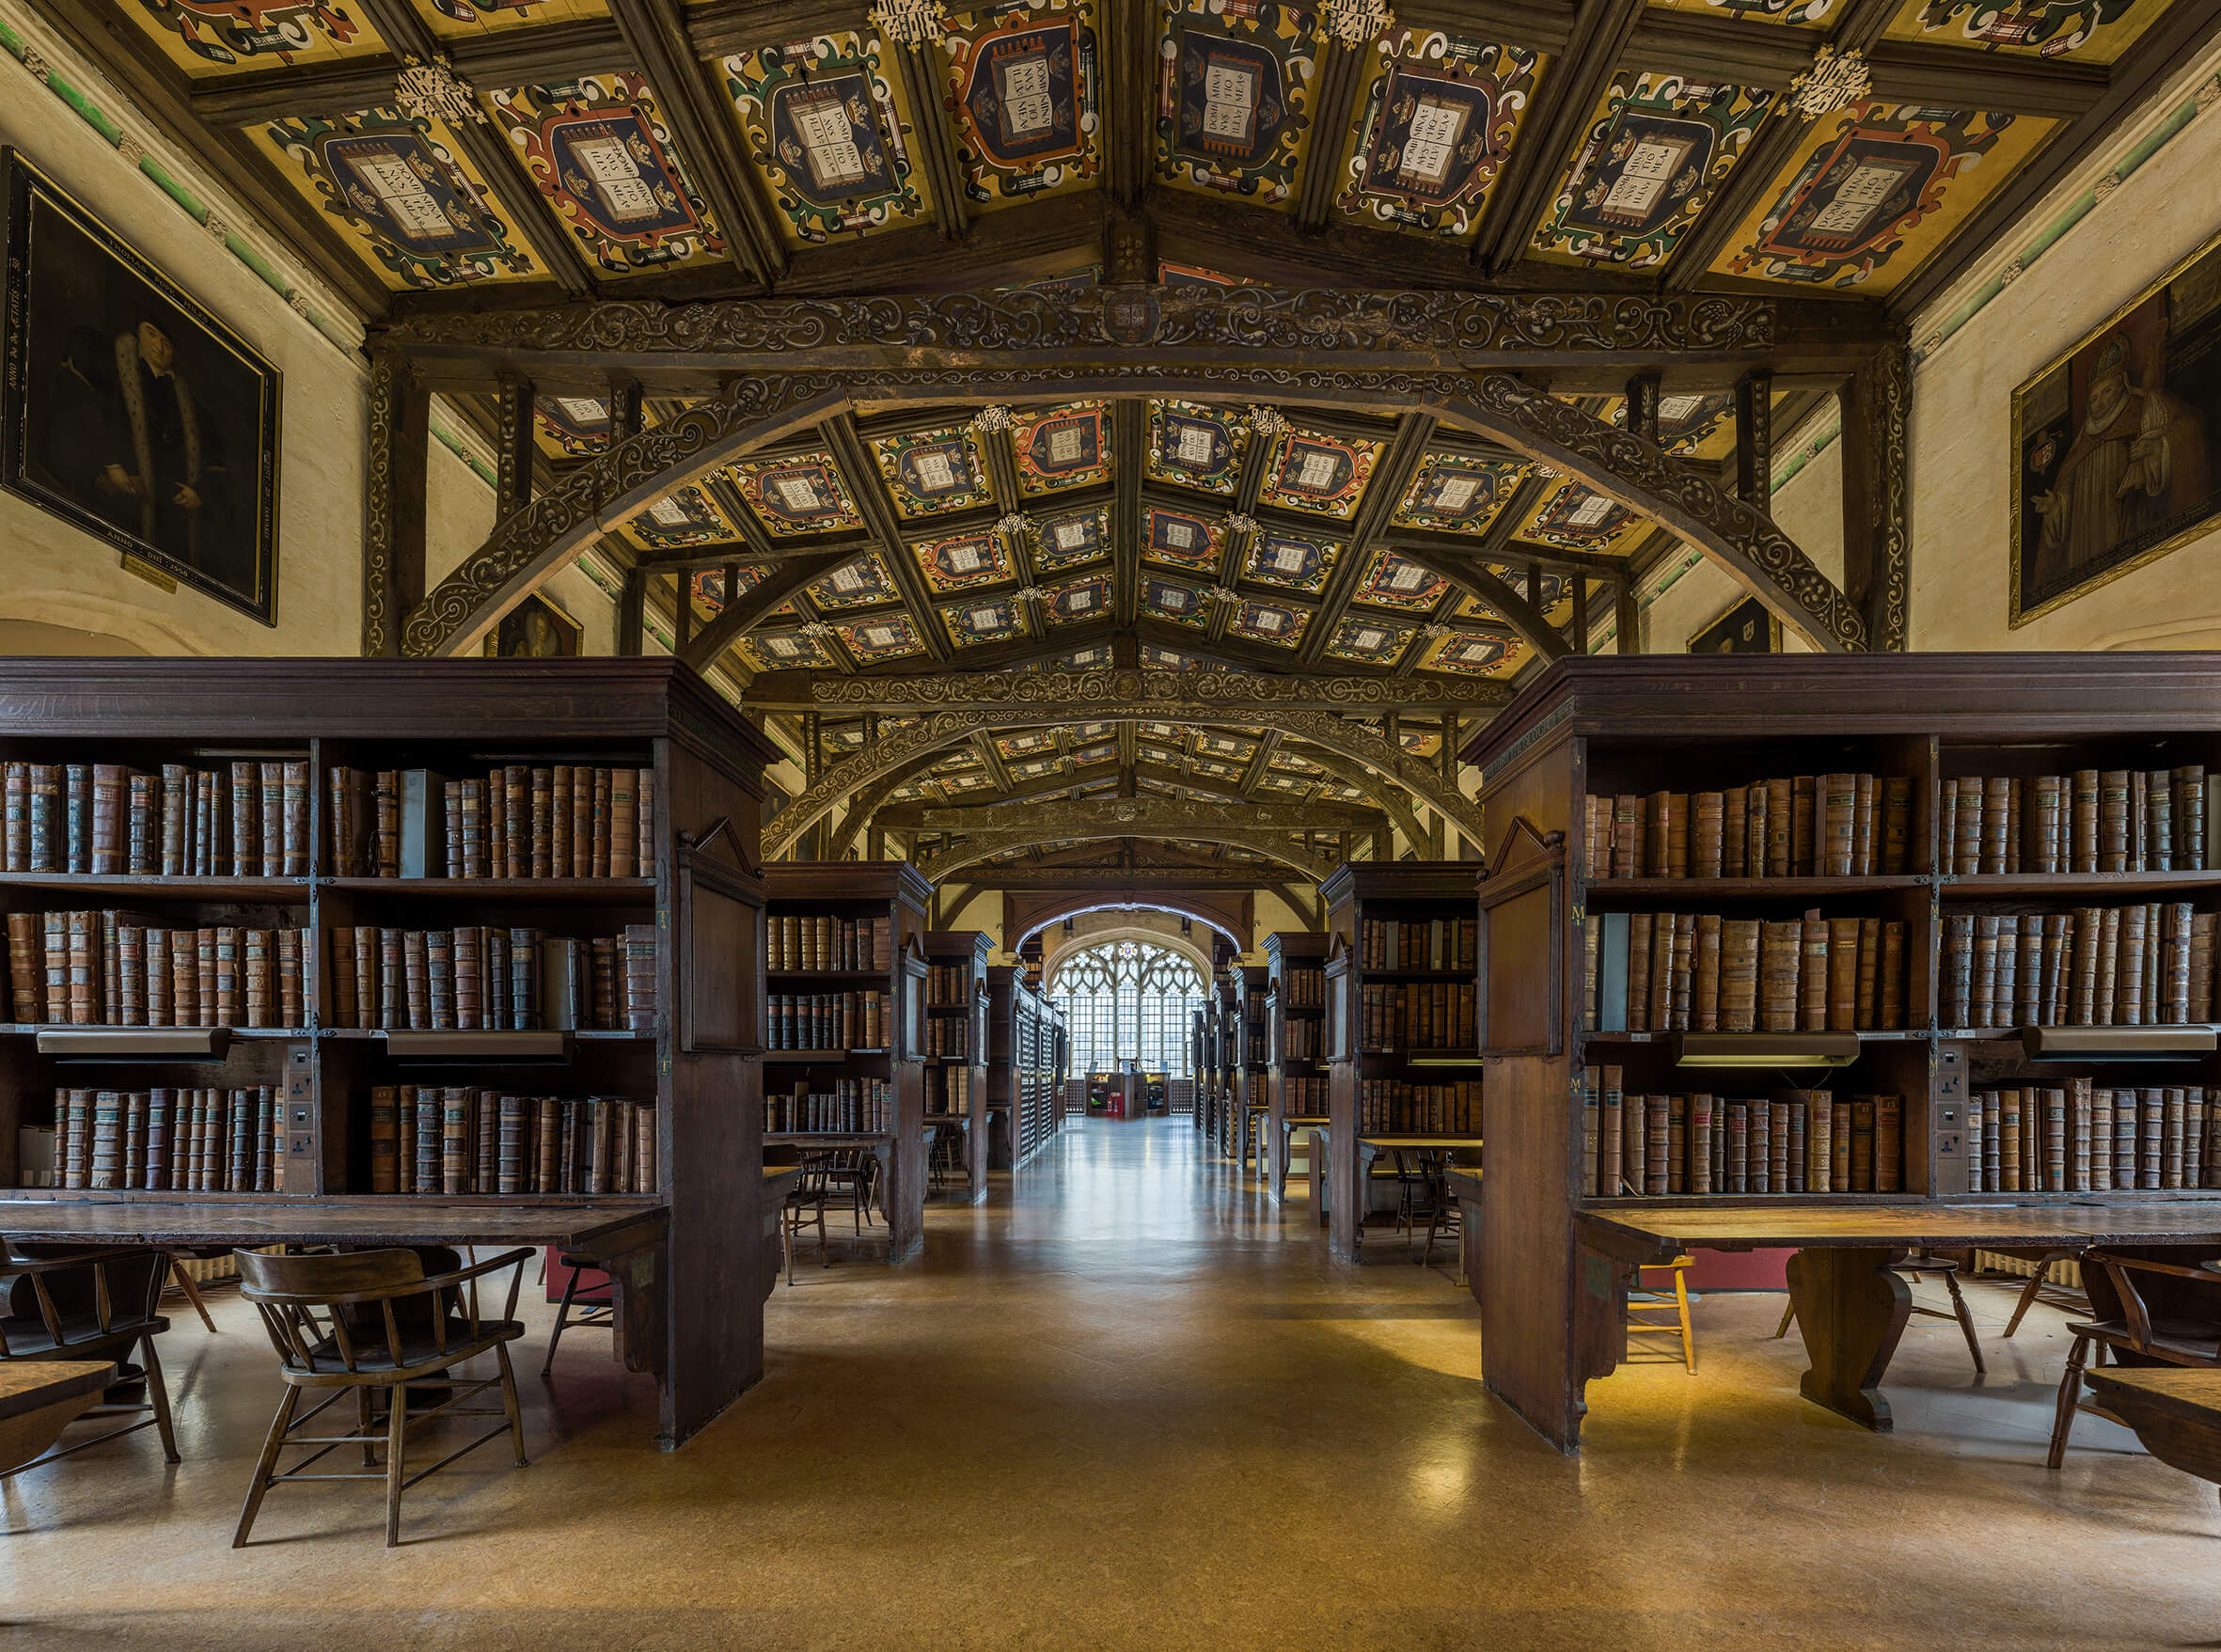 Библ библиотека. Библиотека (Bodleian Library) Оксфорда. Библиотека Хогвартса Бодлианская библиотека Оксфорд. Оксфорд университет Бодлианская библиотека. Бодлеянская библиотека в Оксфорде.